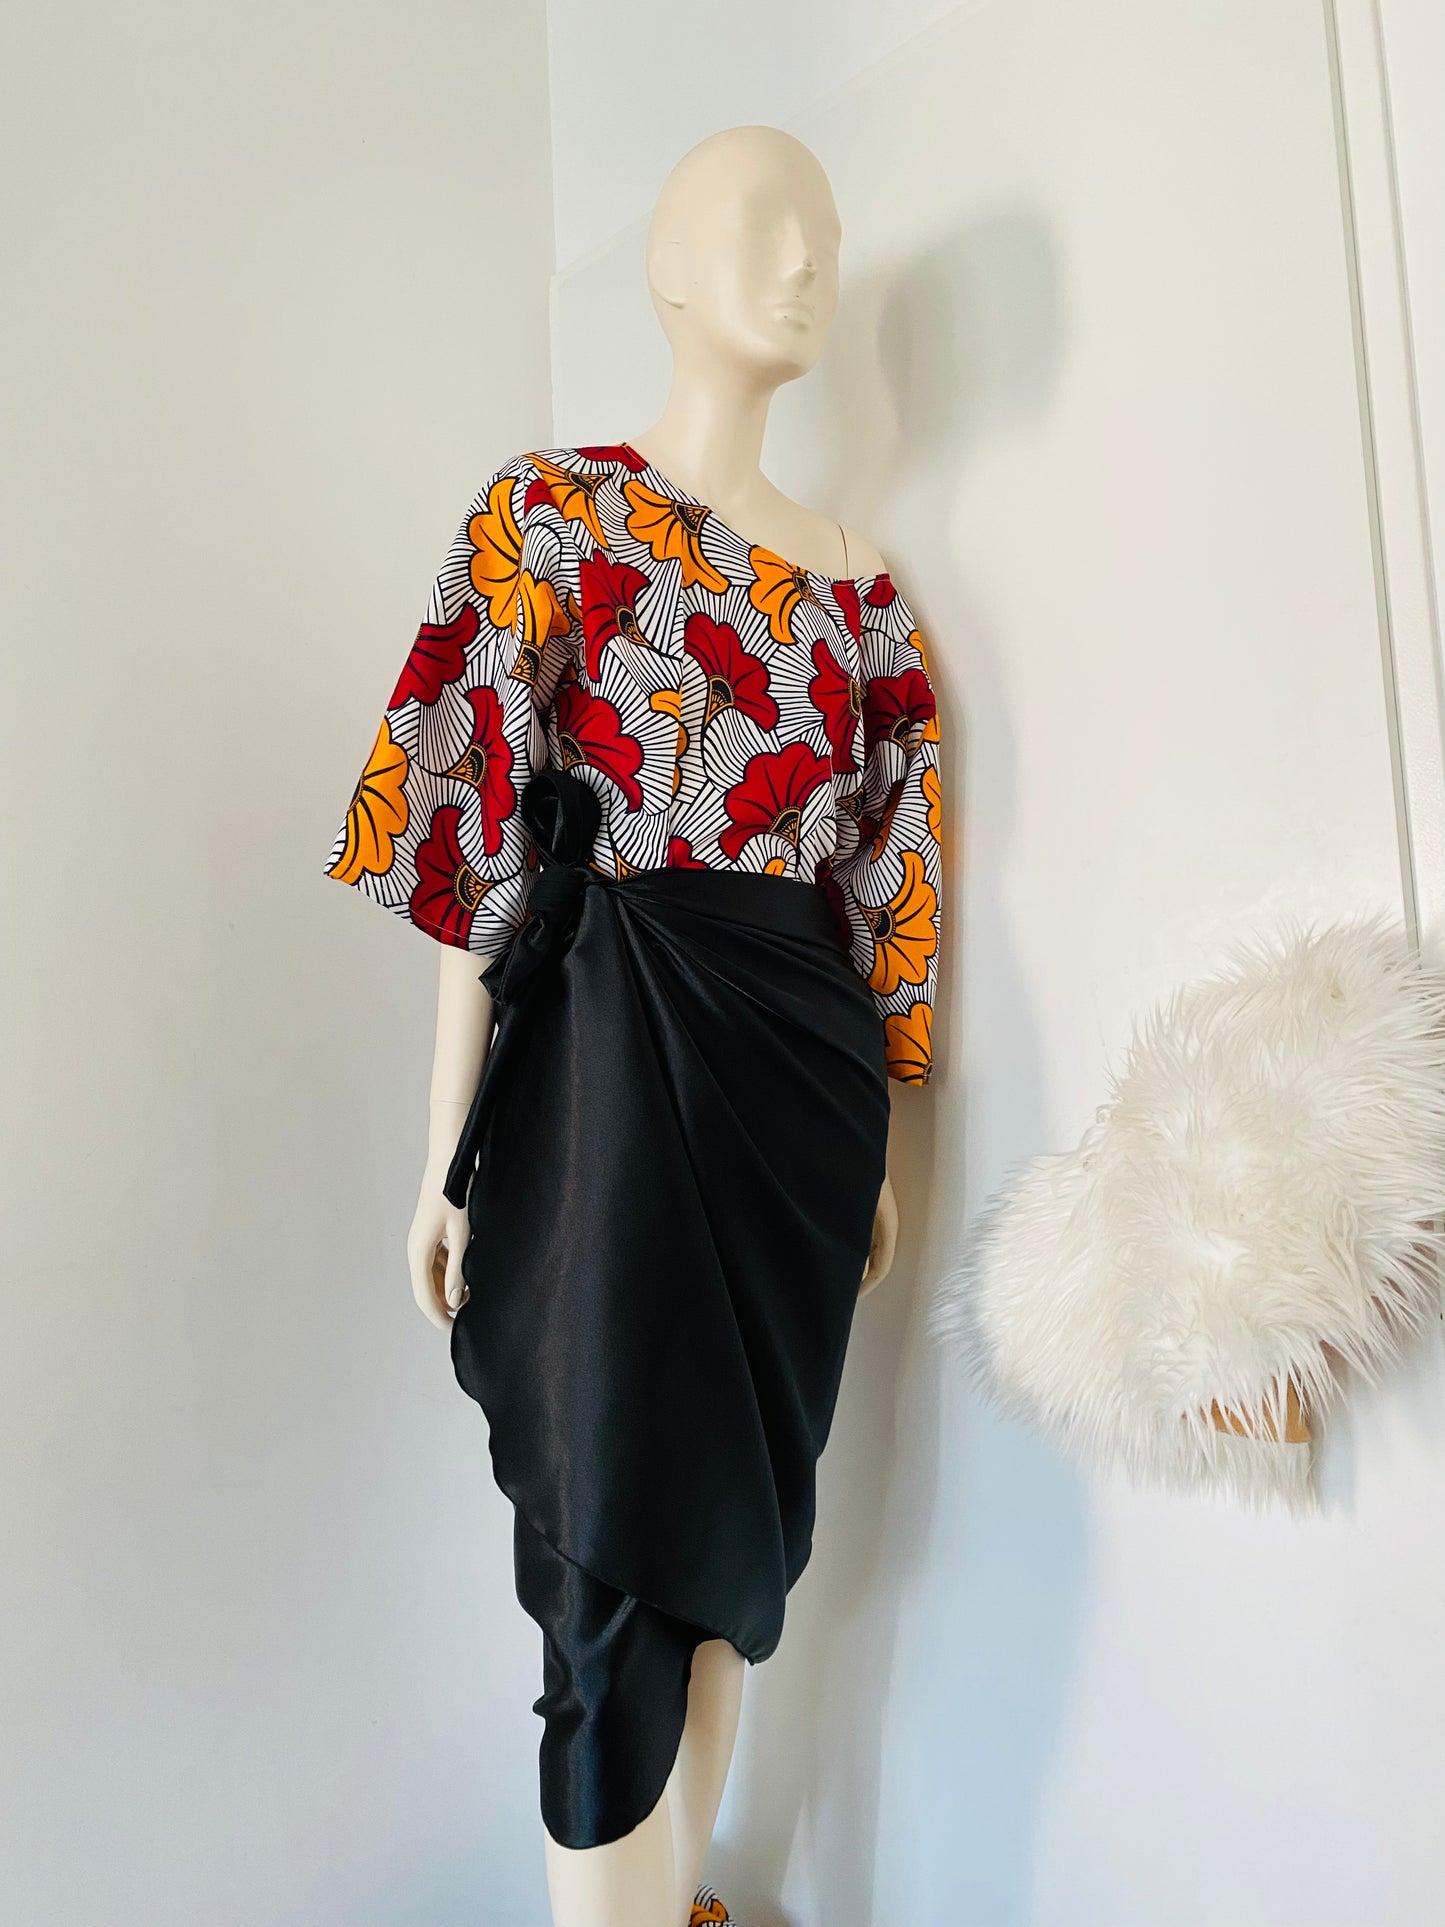 Blouse en wax africain - jupe en satin taille haute - jupe en satin noir